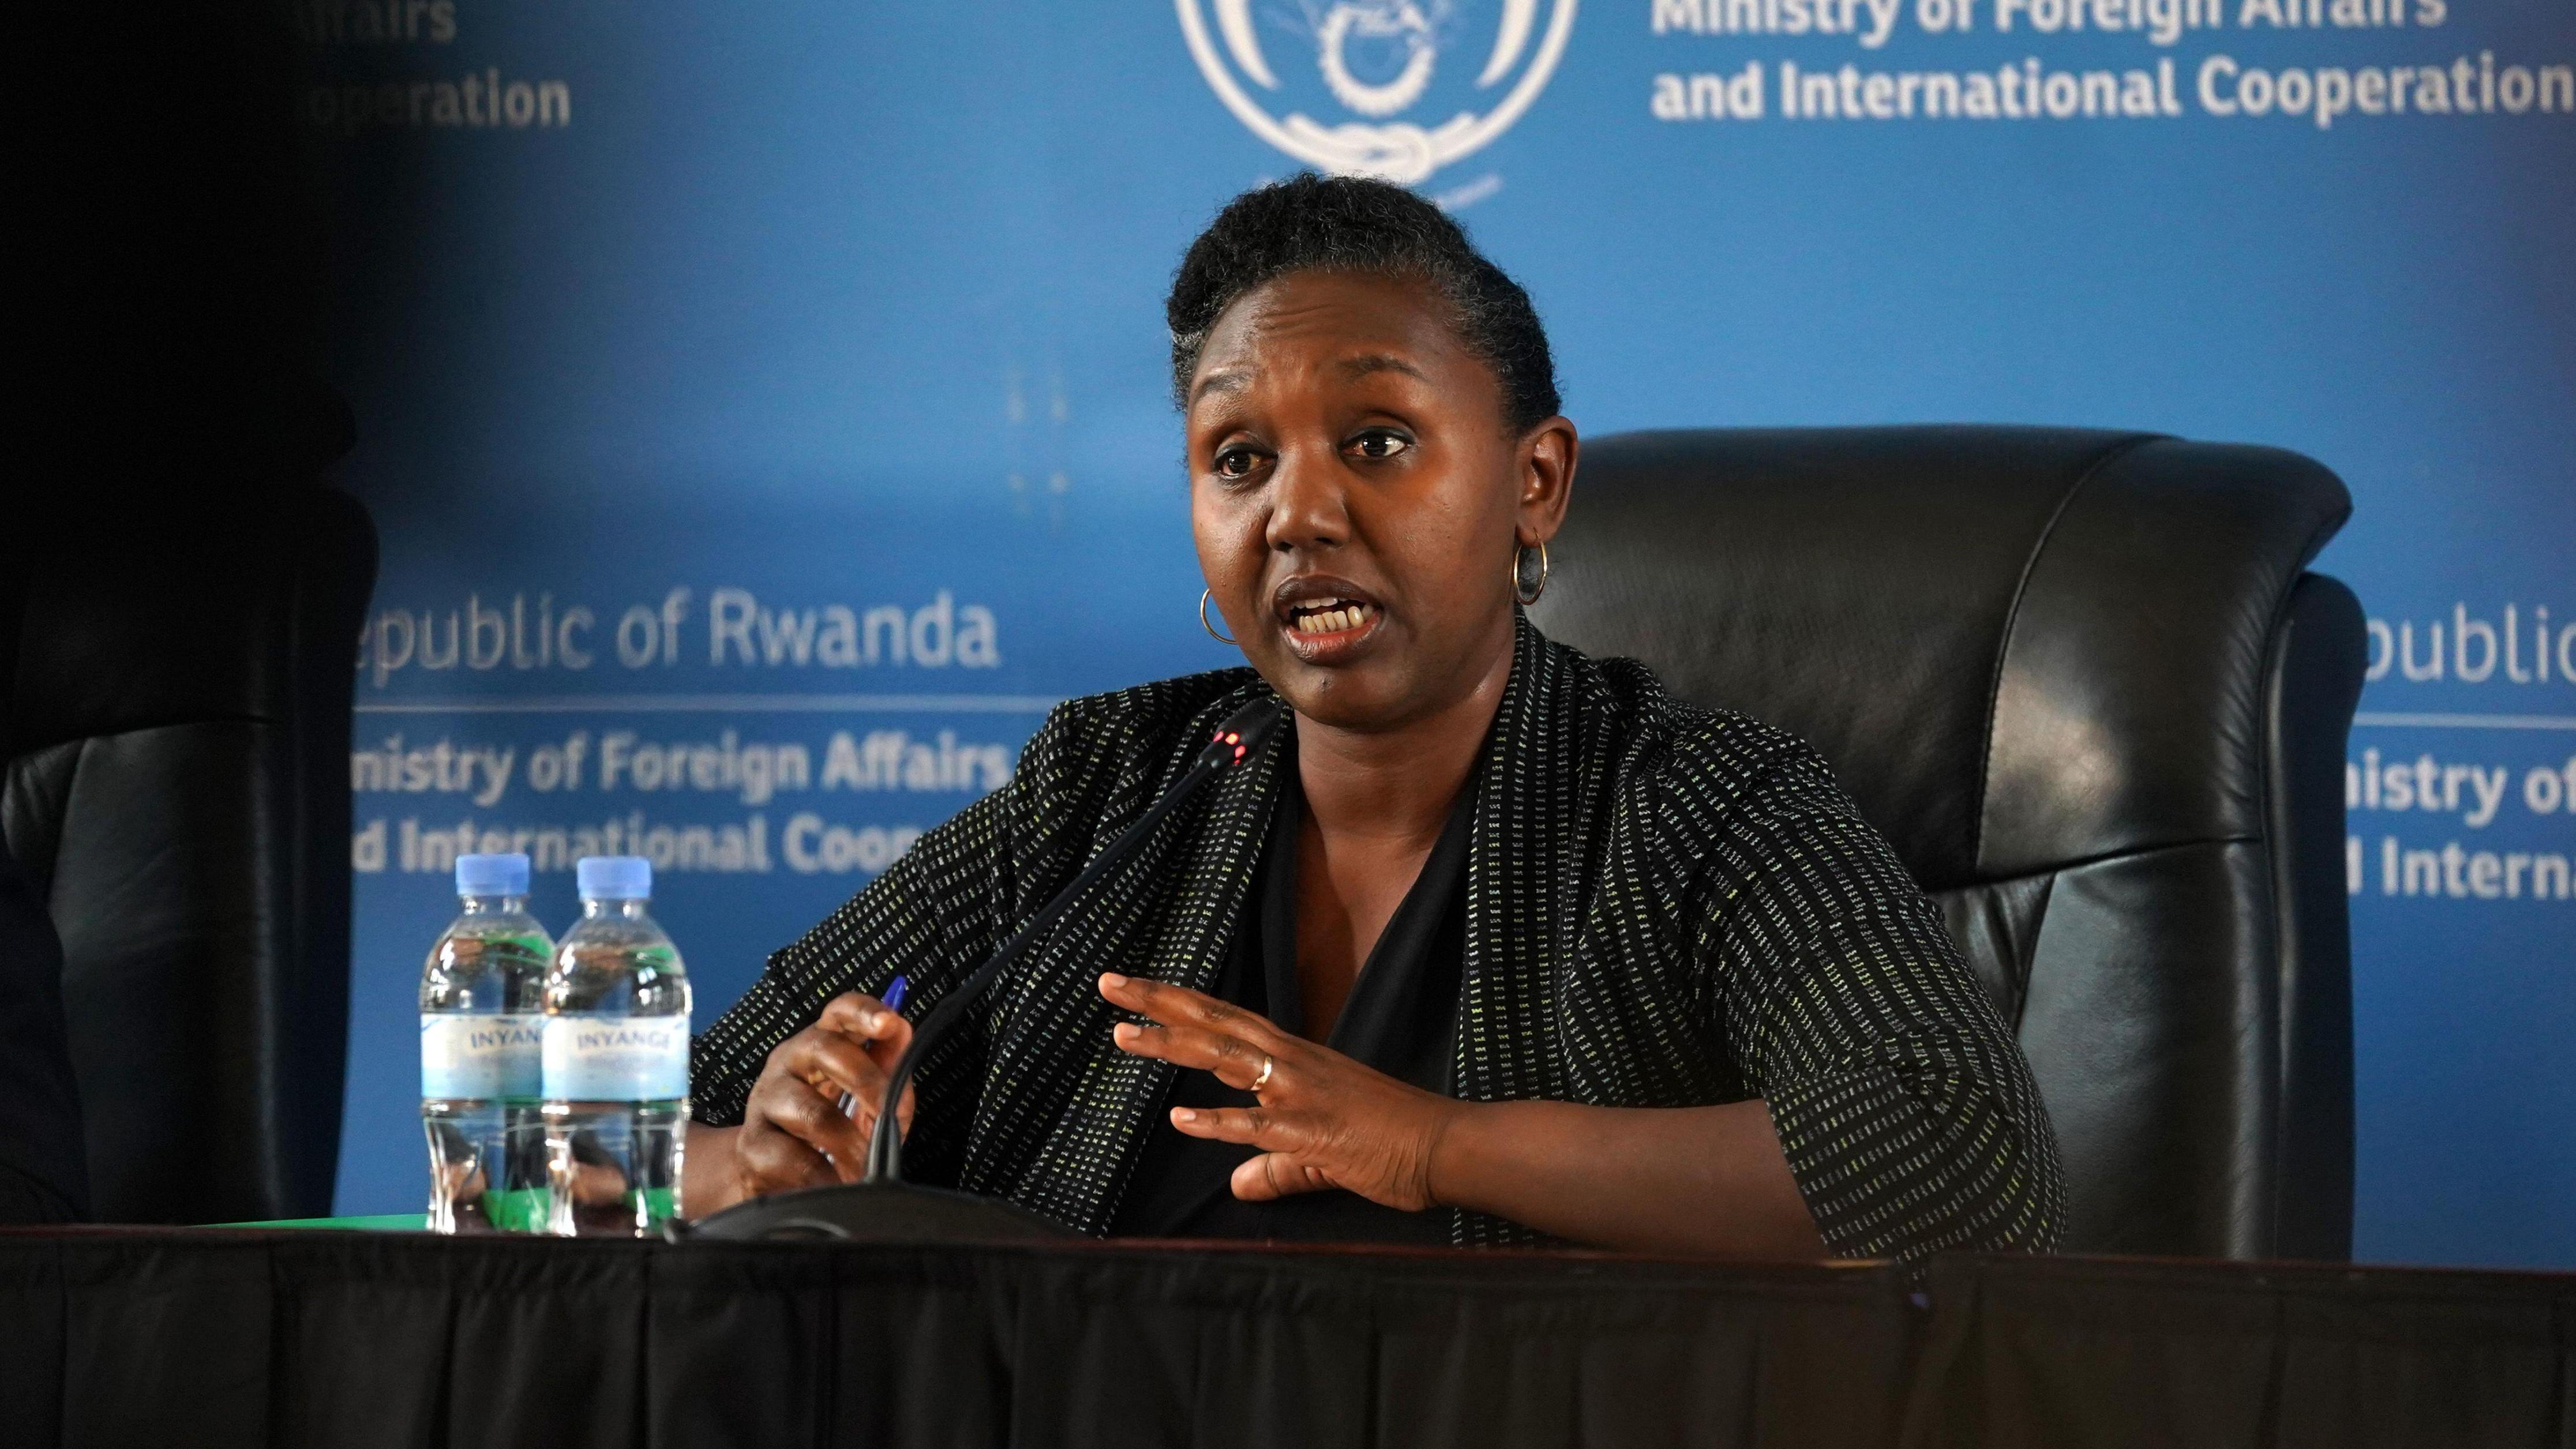 Yolande Makolo, a spokeswoman for the Rwandan government, defended the deportation scheme